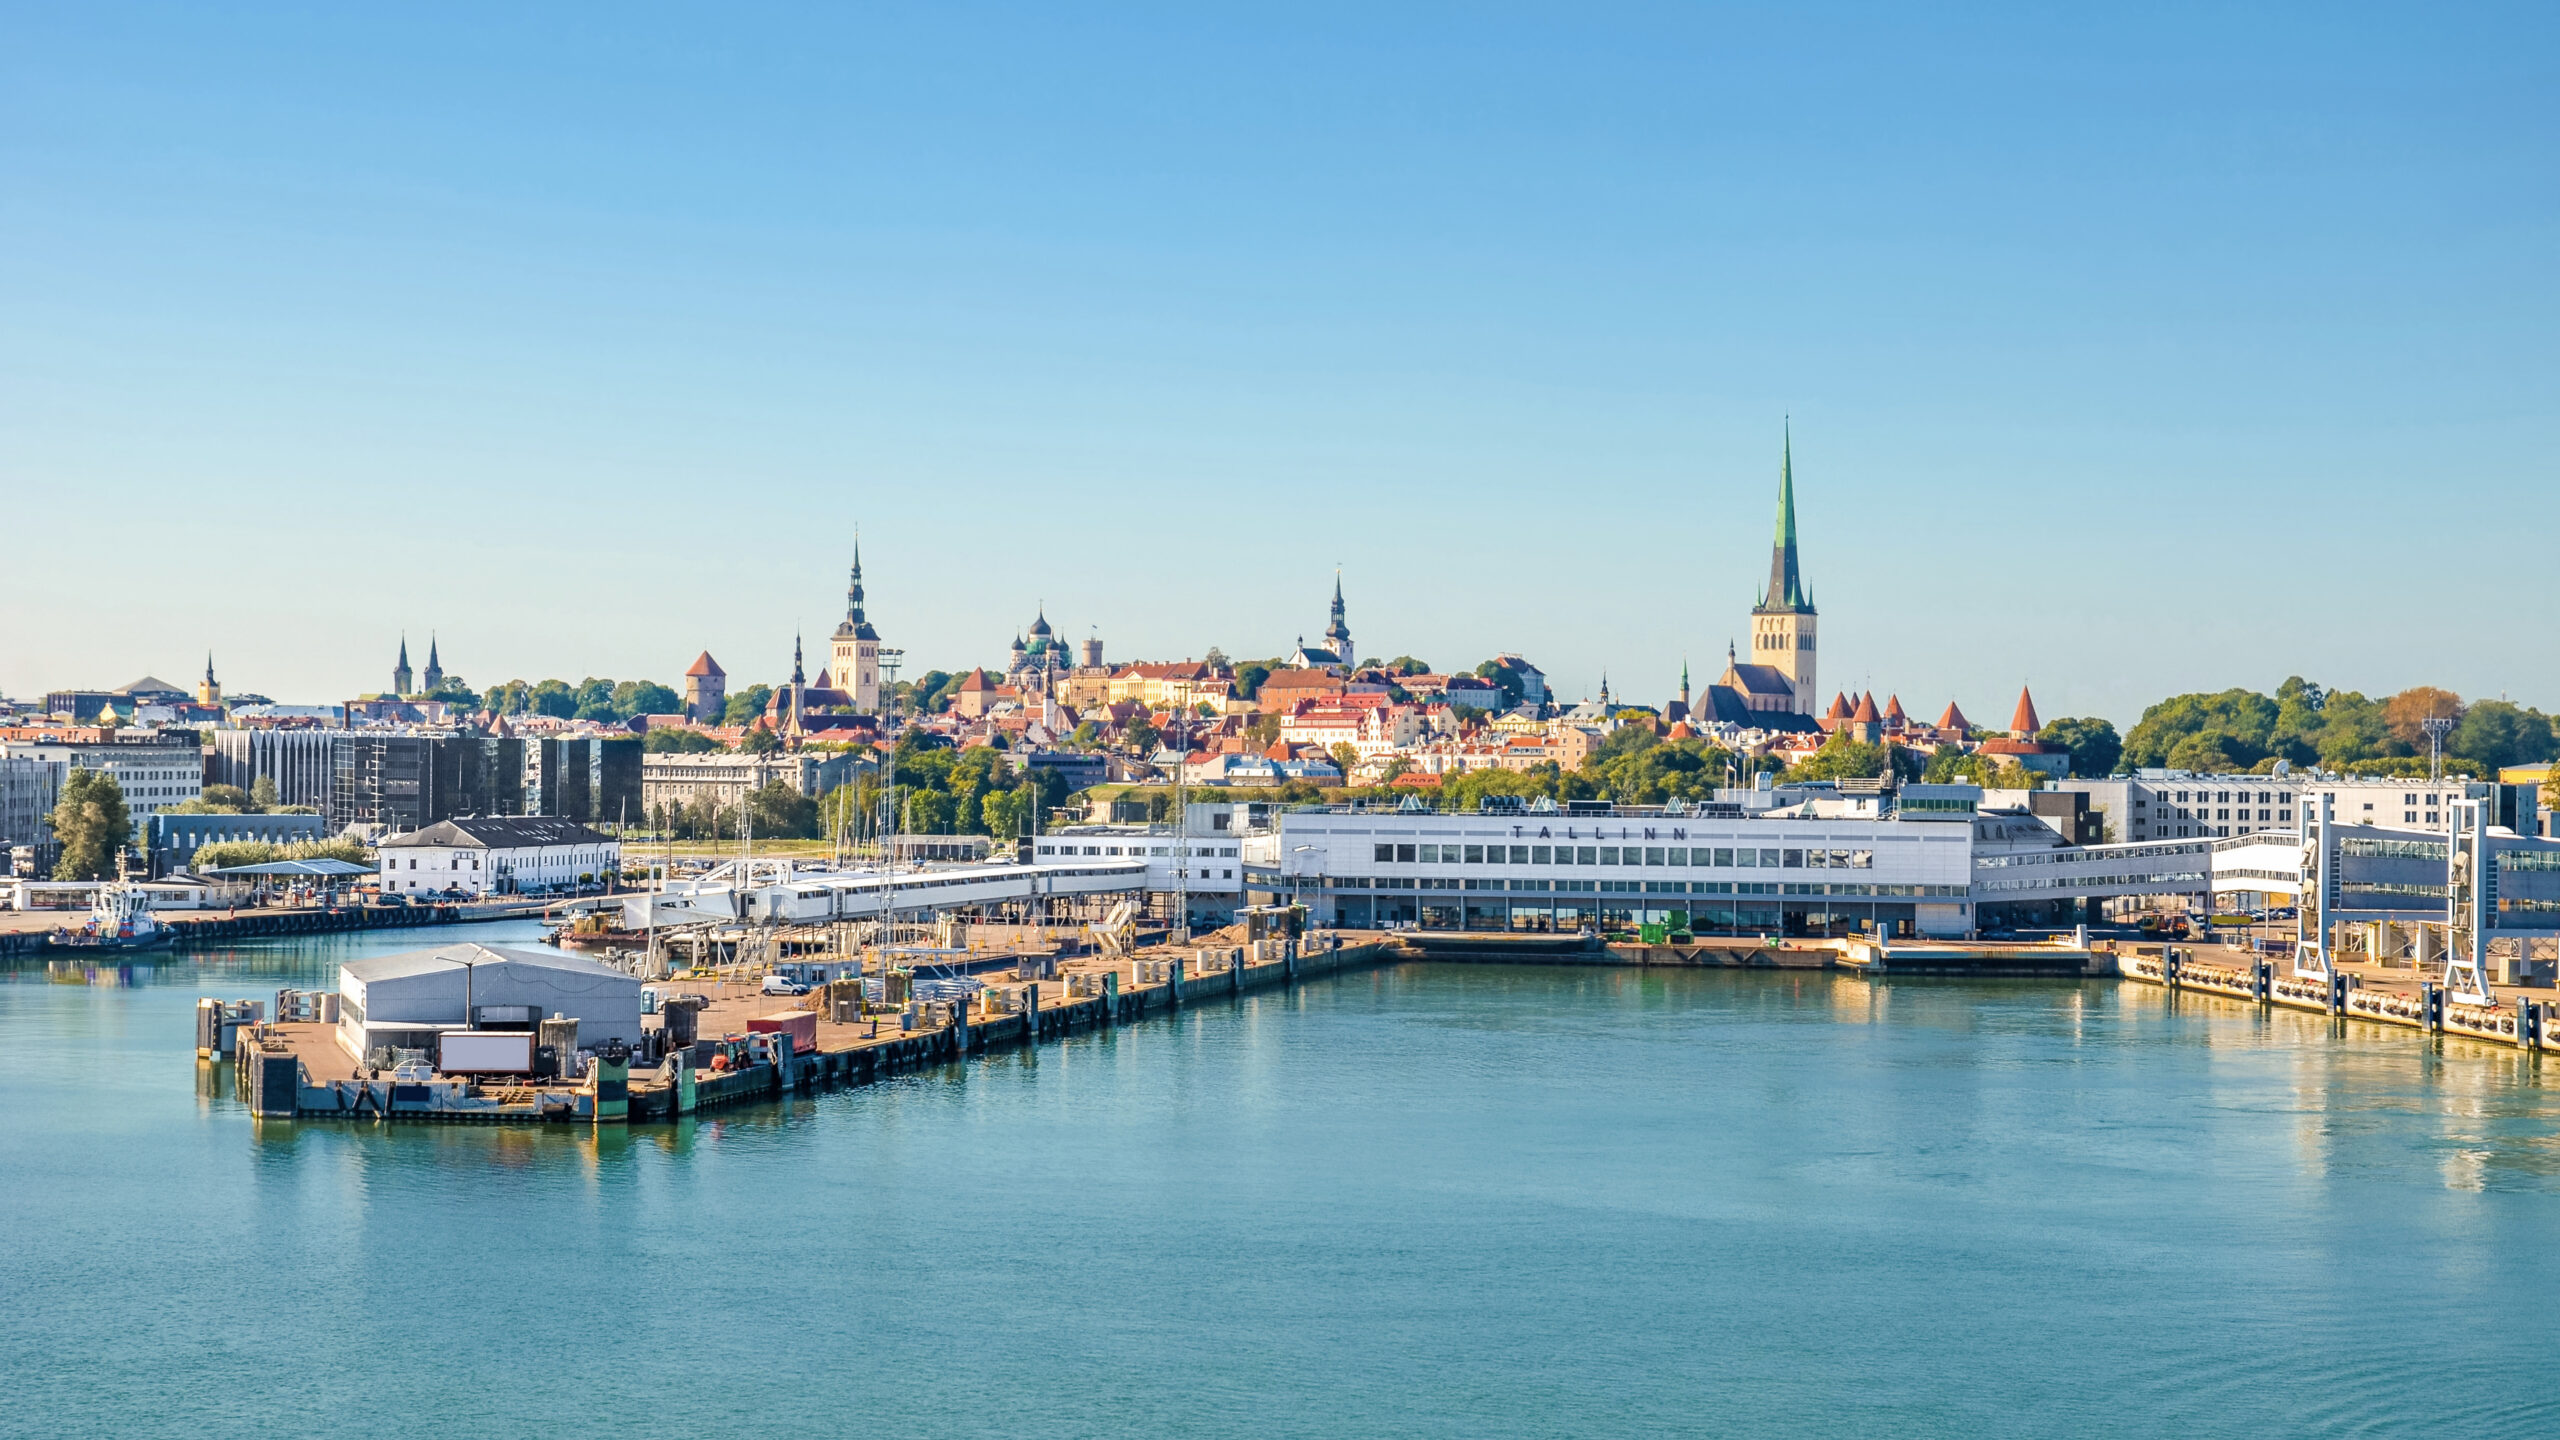 View of port of Tallinn, Estonia in summertime